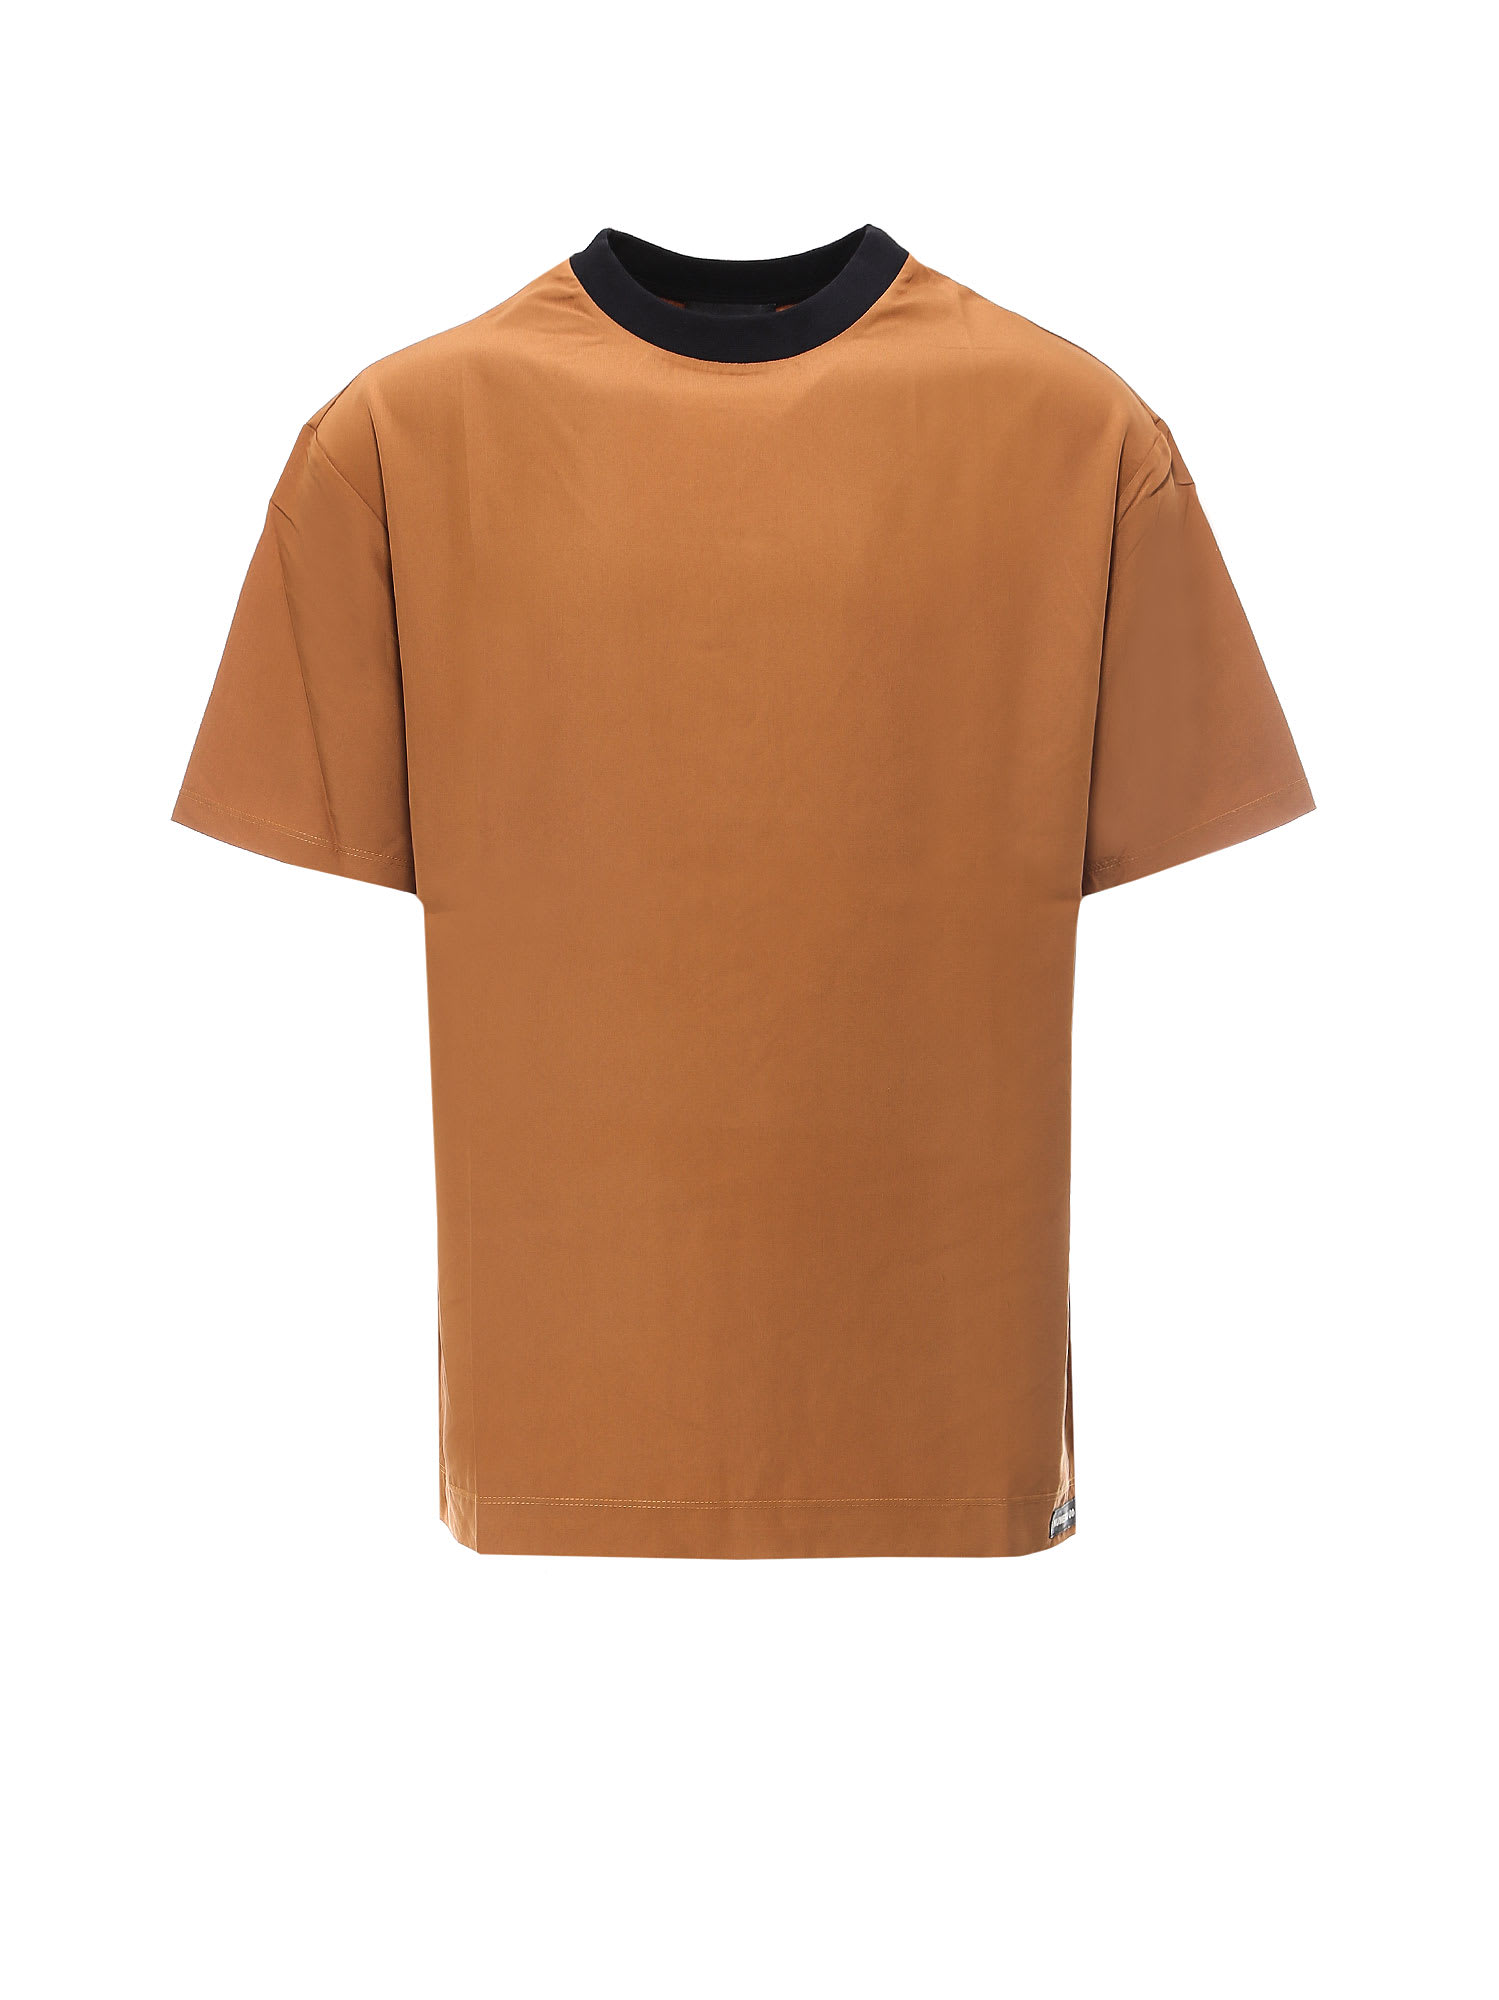 Numero 00 Short Sleeve T-Shirts | italist, ALWAYS LIKE A SALE